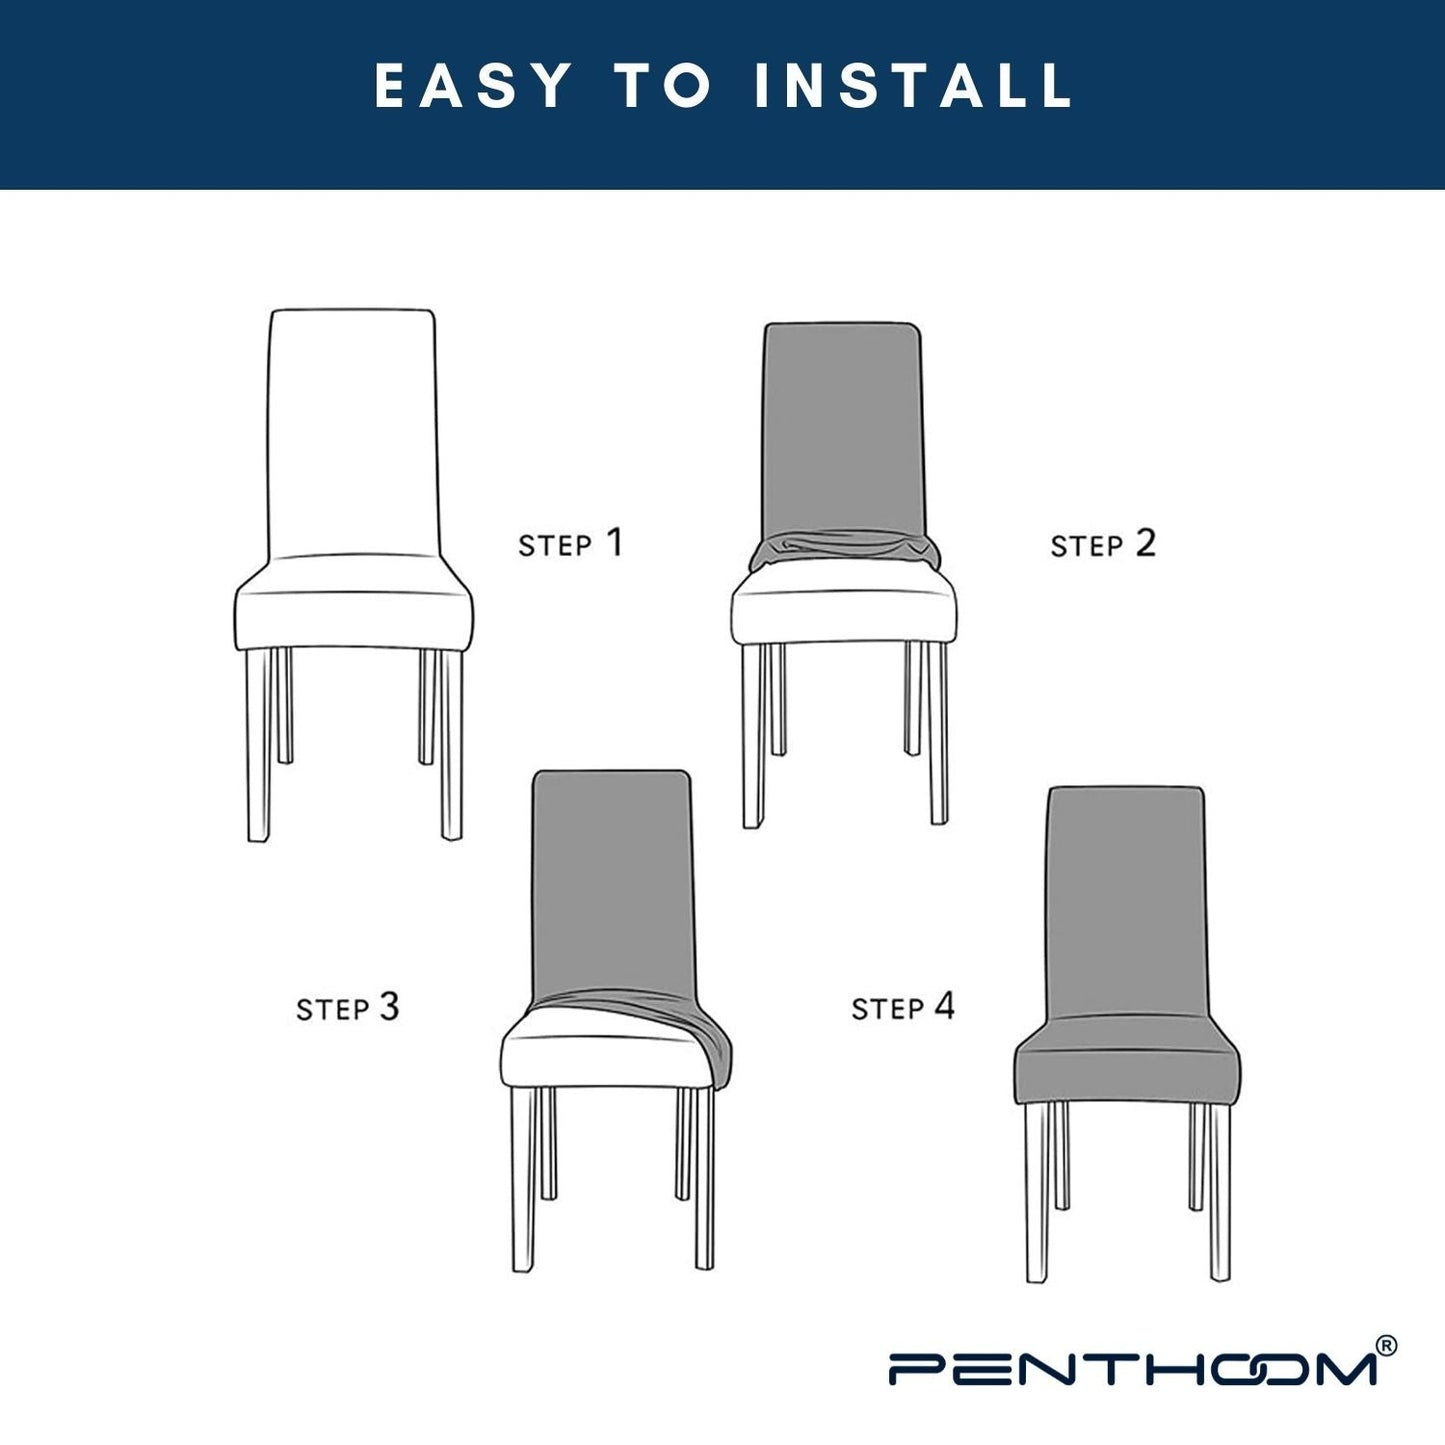 PENTHOOM Elastic Dining Chair Cover - Premium Fabric Seat Slipcover - Maroon